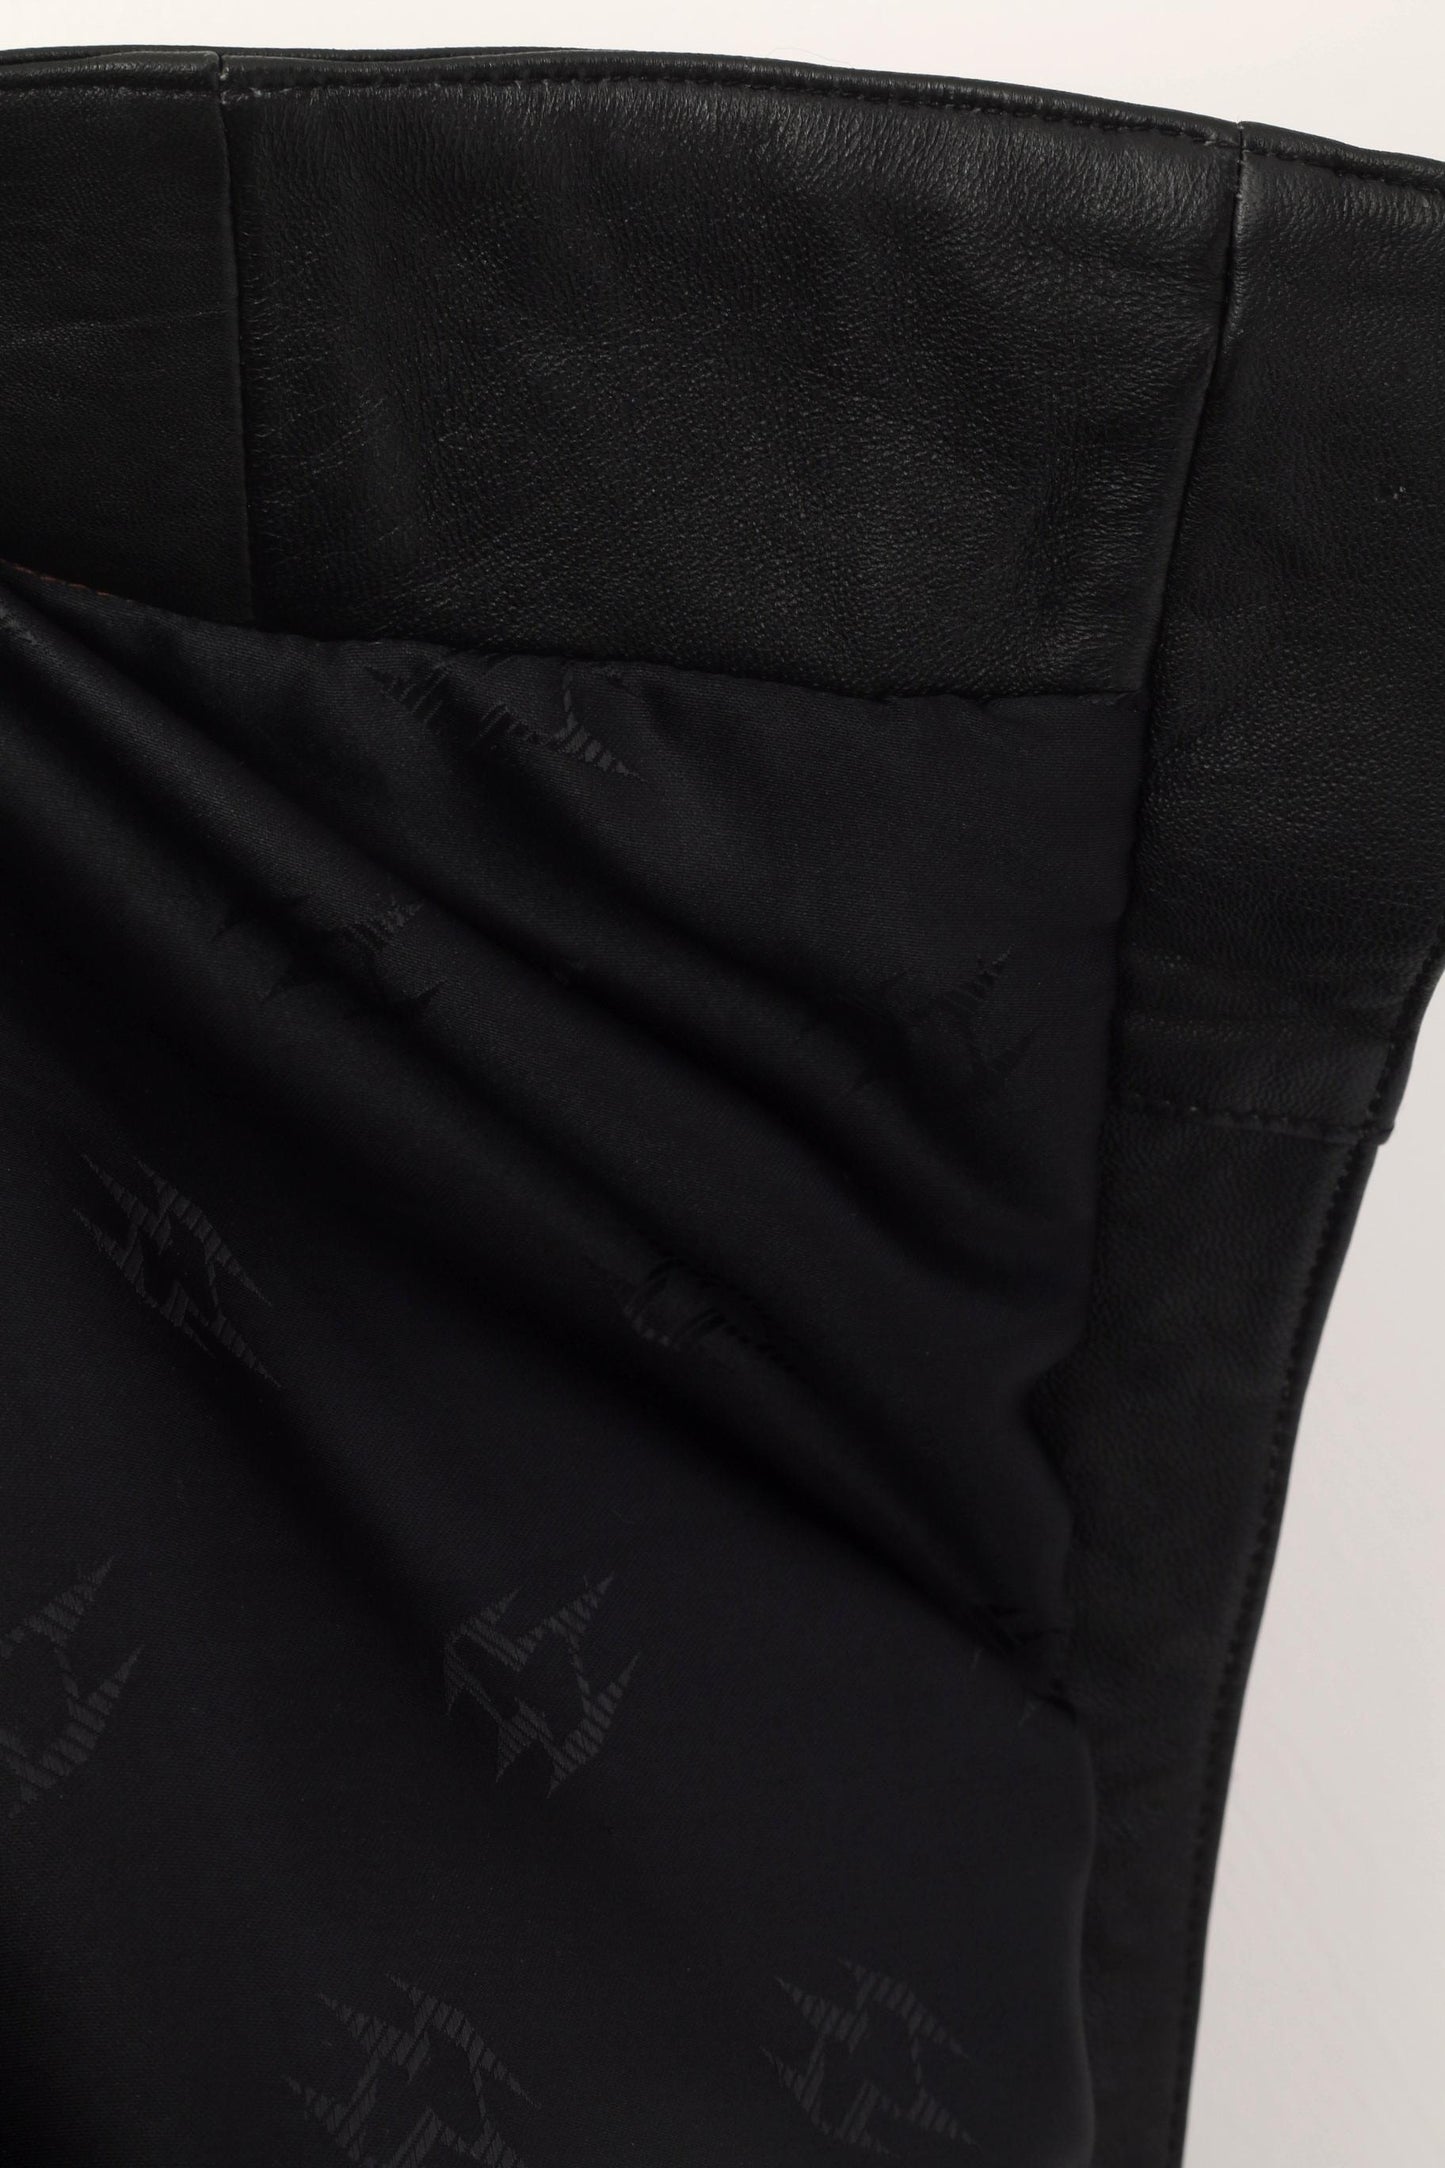 Skinny Collection Women M Jacket Black Soft Leather Vintages Shoulder Pads Retro Top